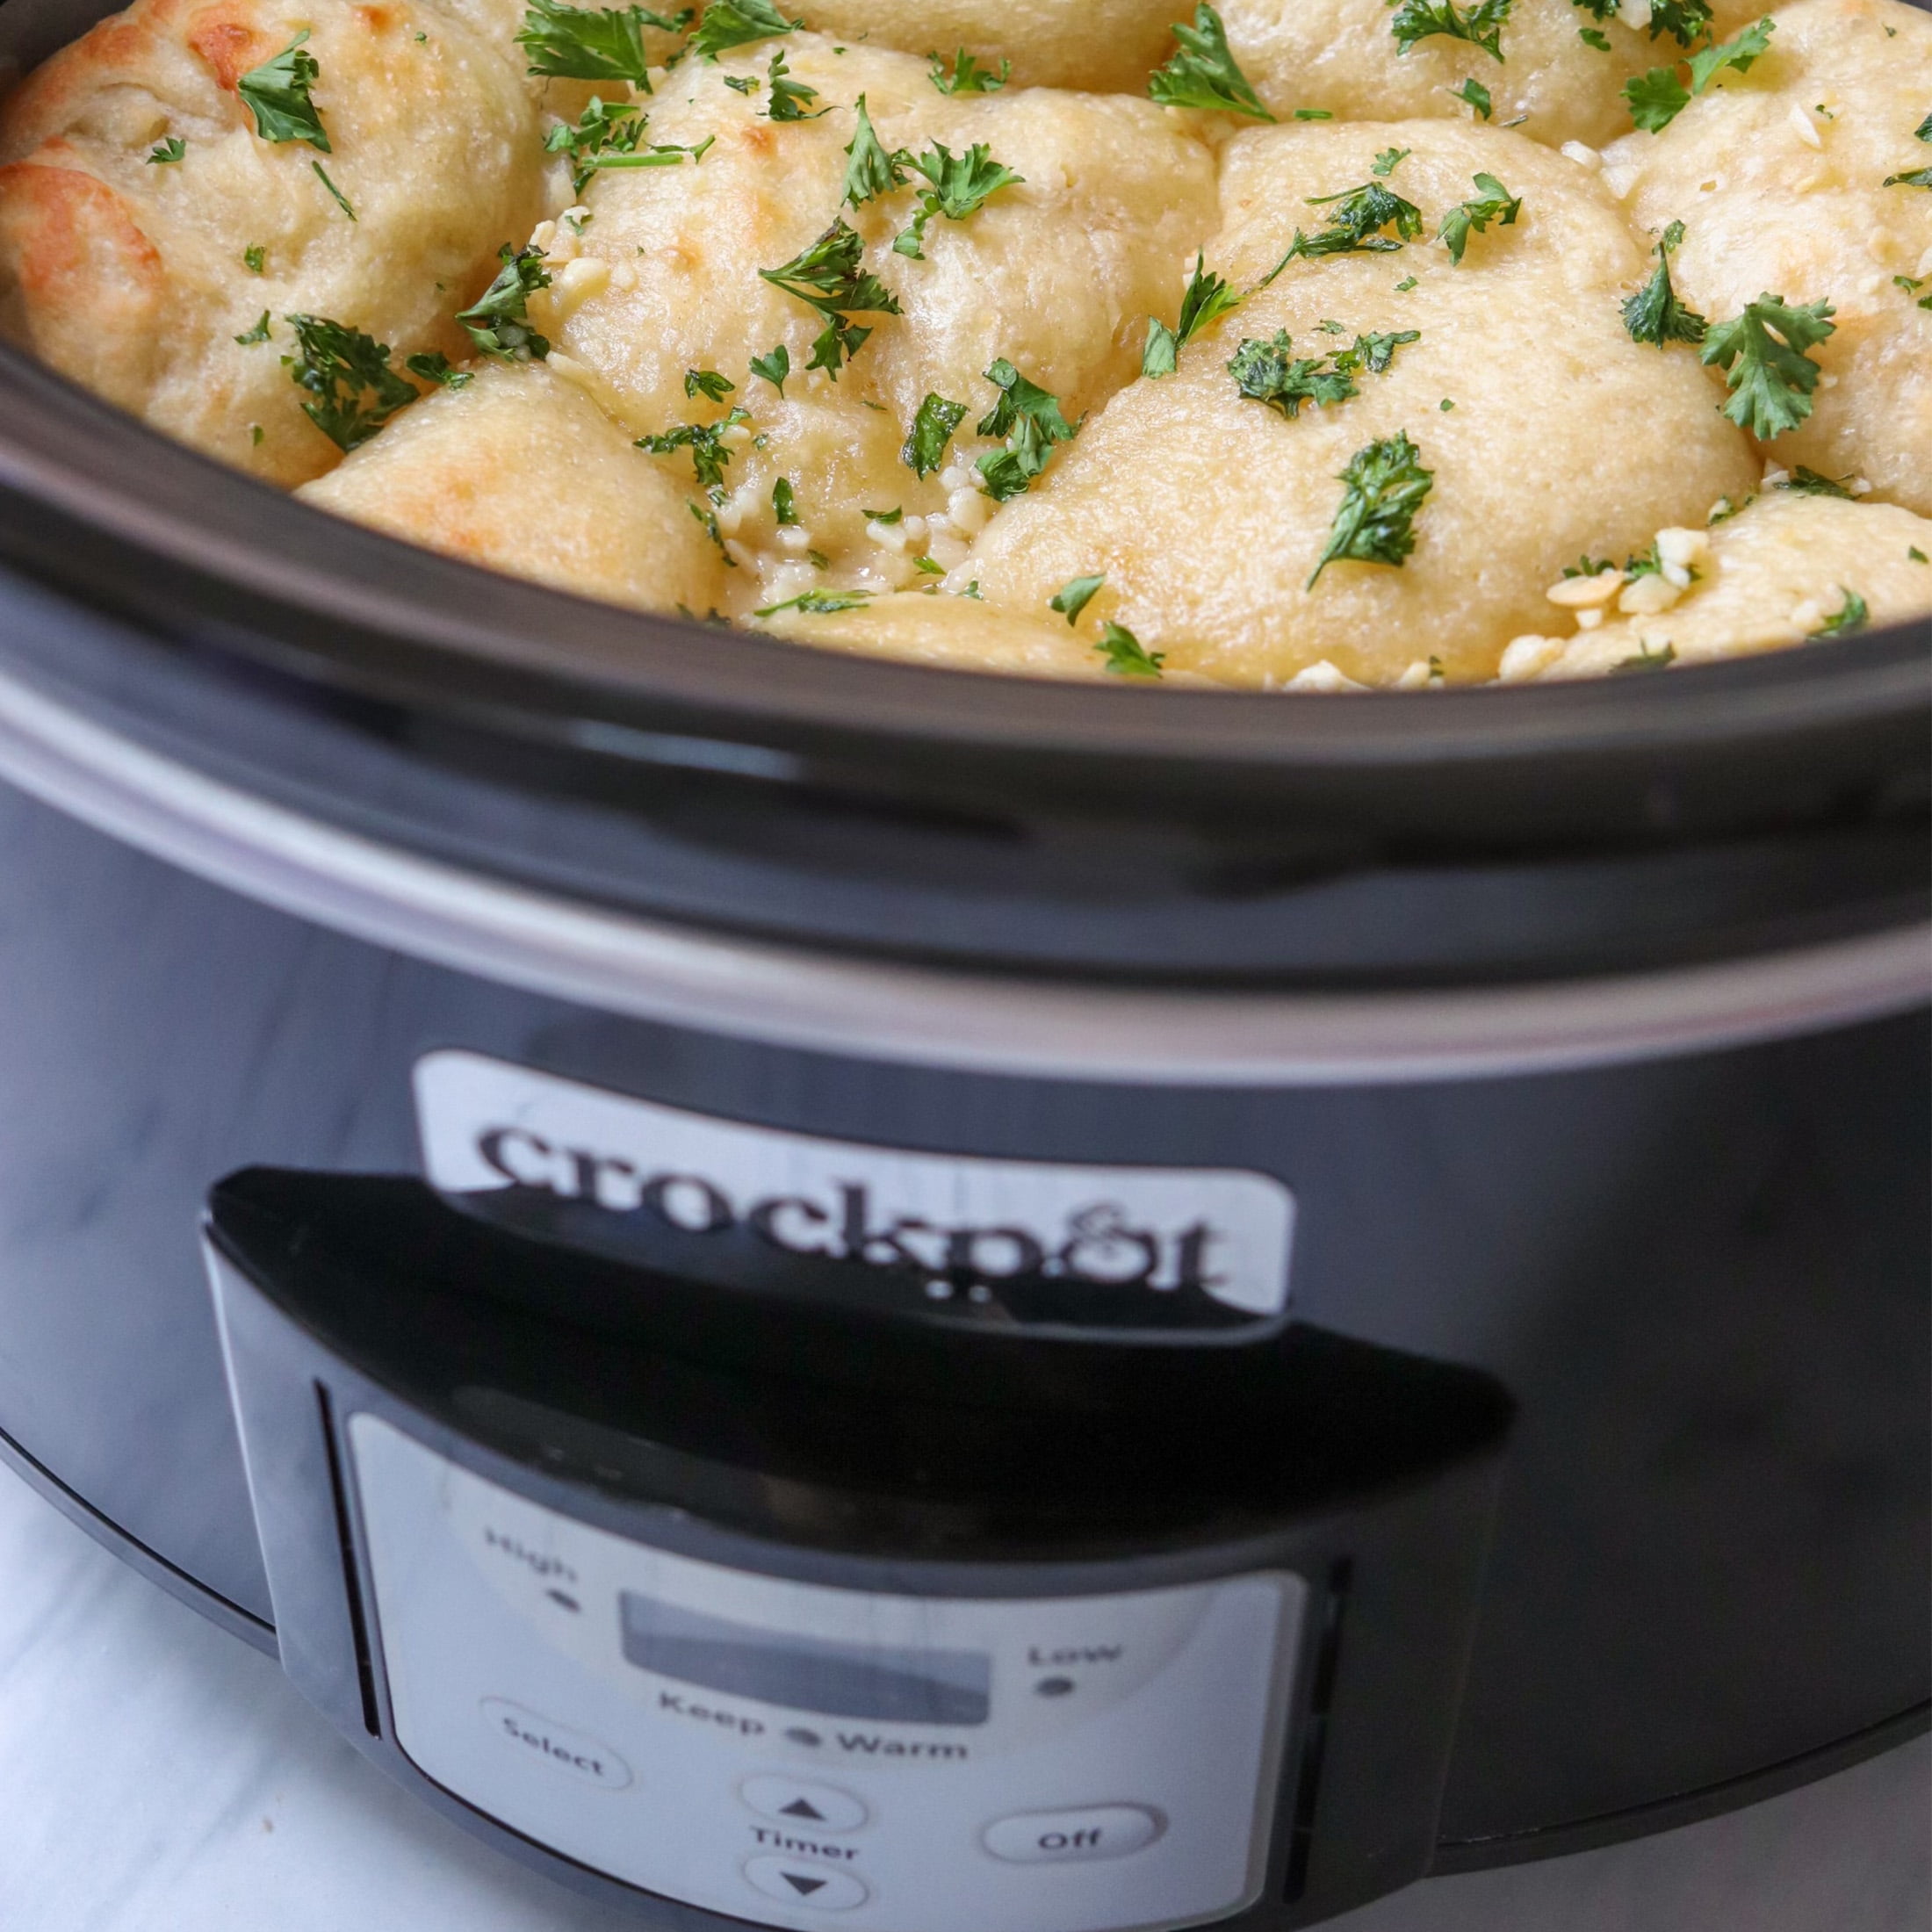 Crock-Pot 4 Quart Digital Count Down Food Slow Cooker Kitchen